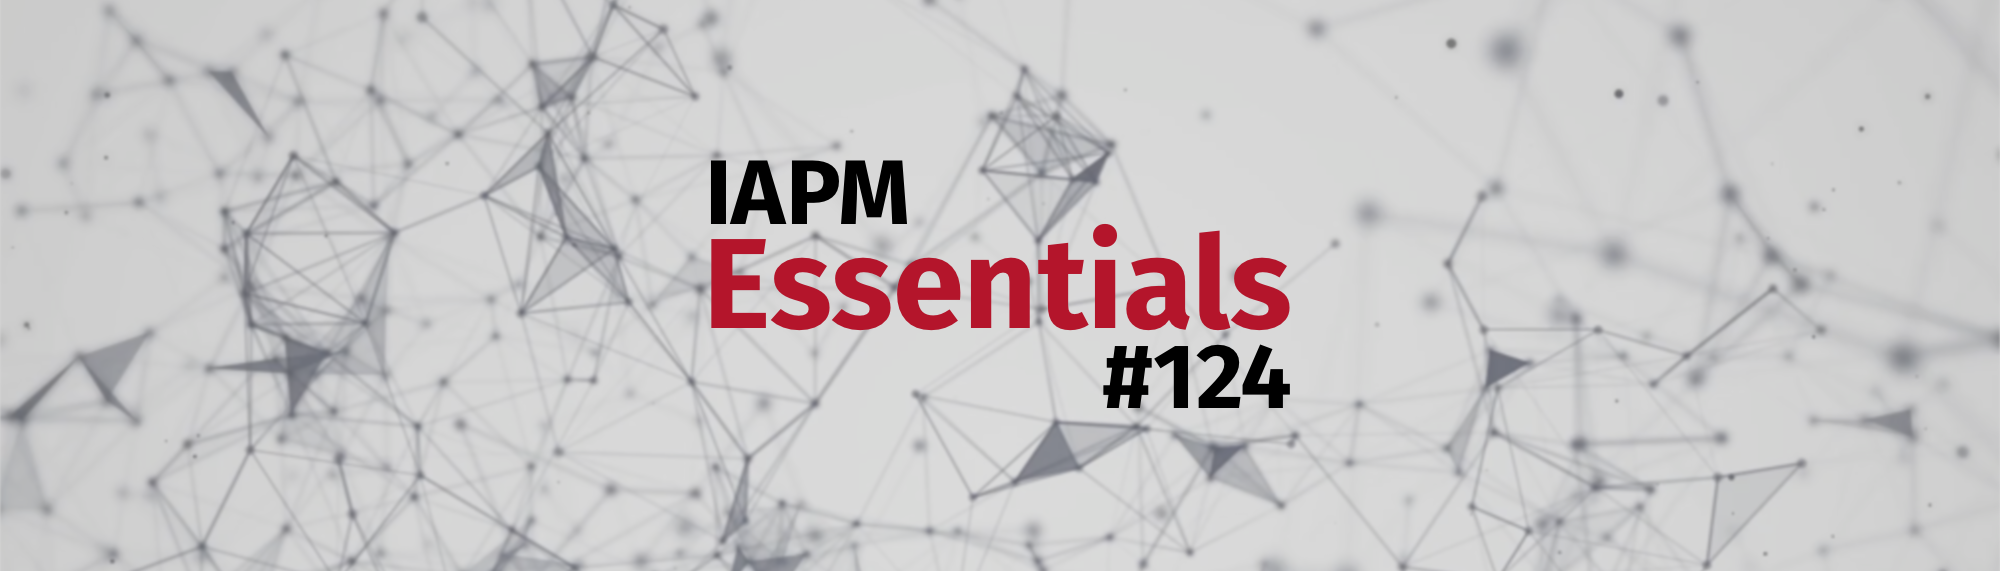 IAPM Essentials #124 - PM Neuigkeiten | IAPM